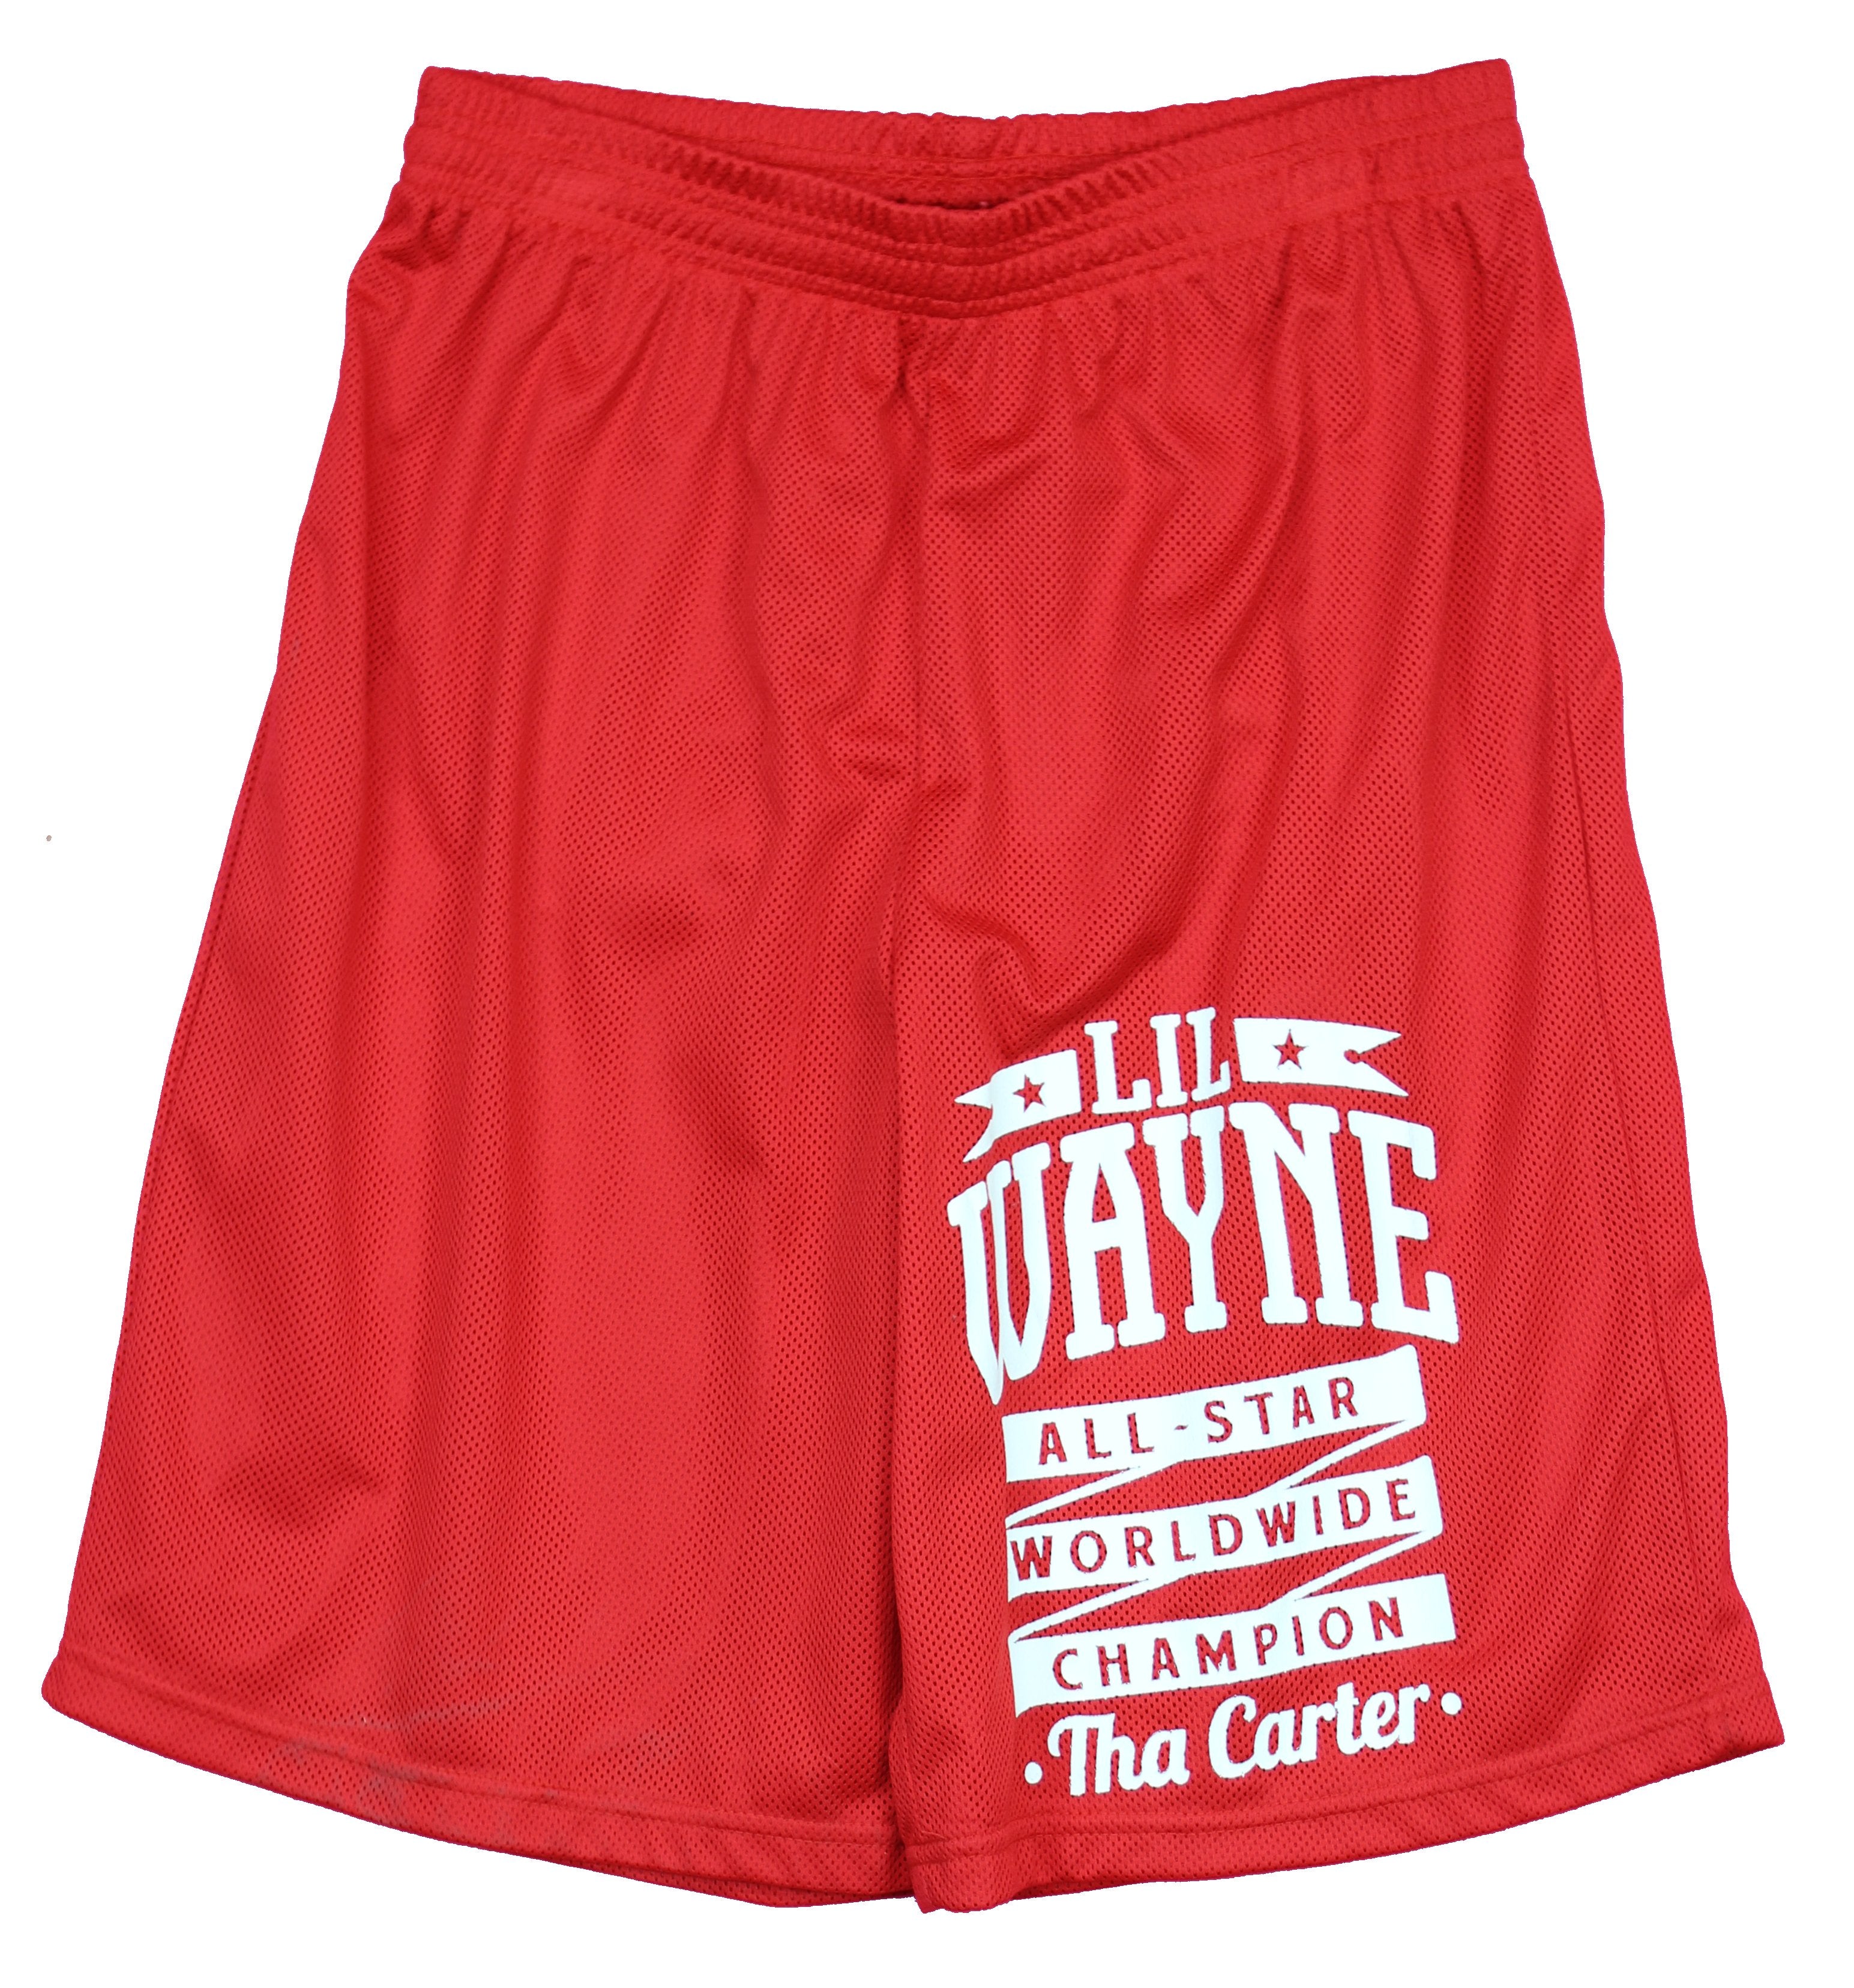 Lil Wayne "Tha Carter" All Star Worldwide Champion Basketball Shorts